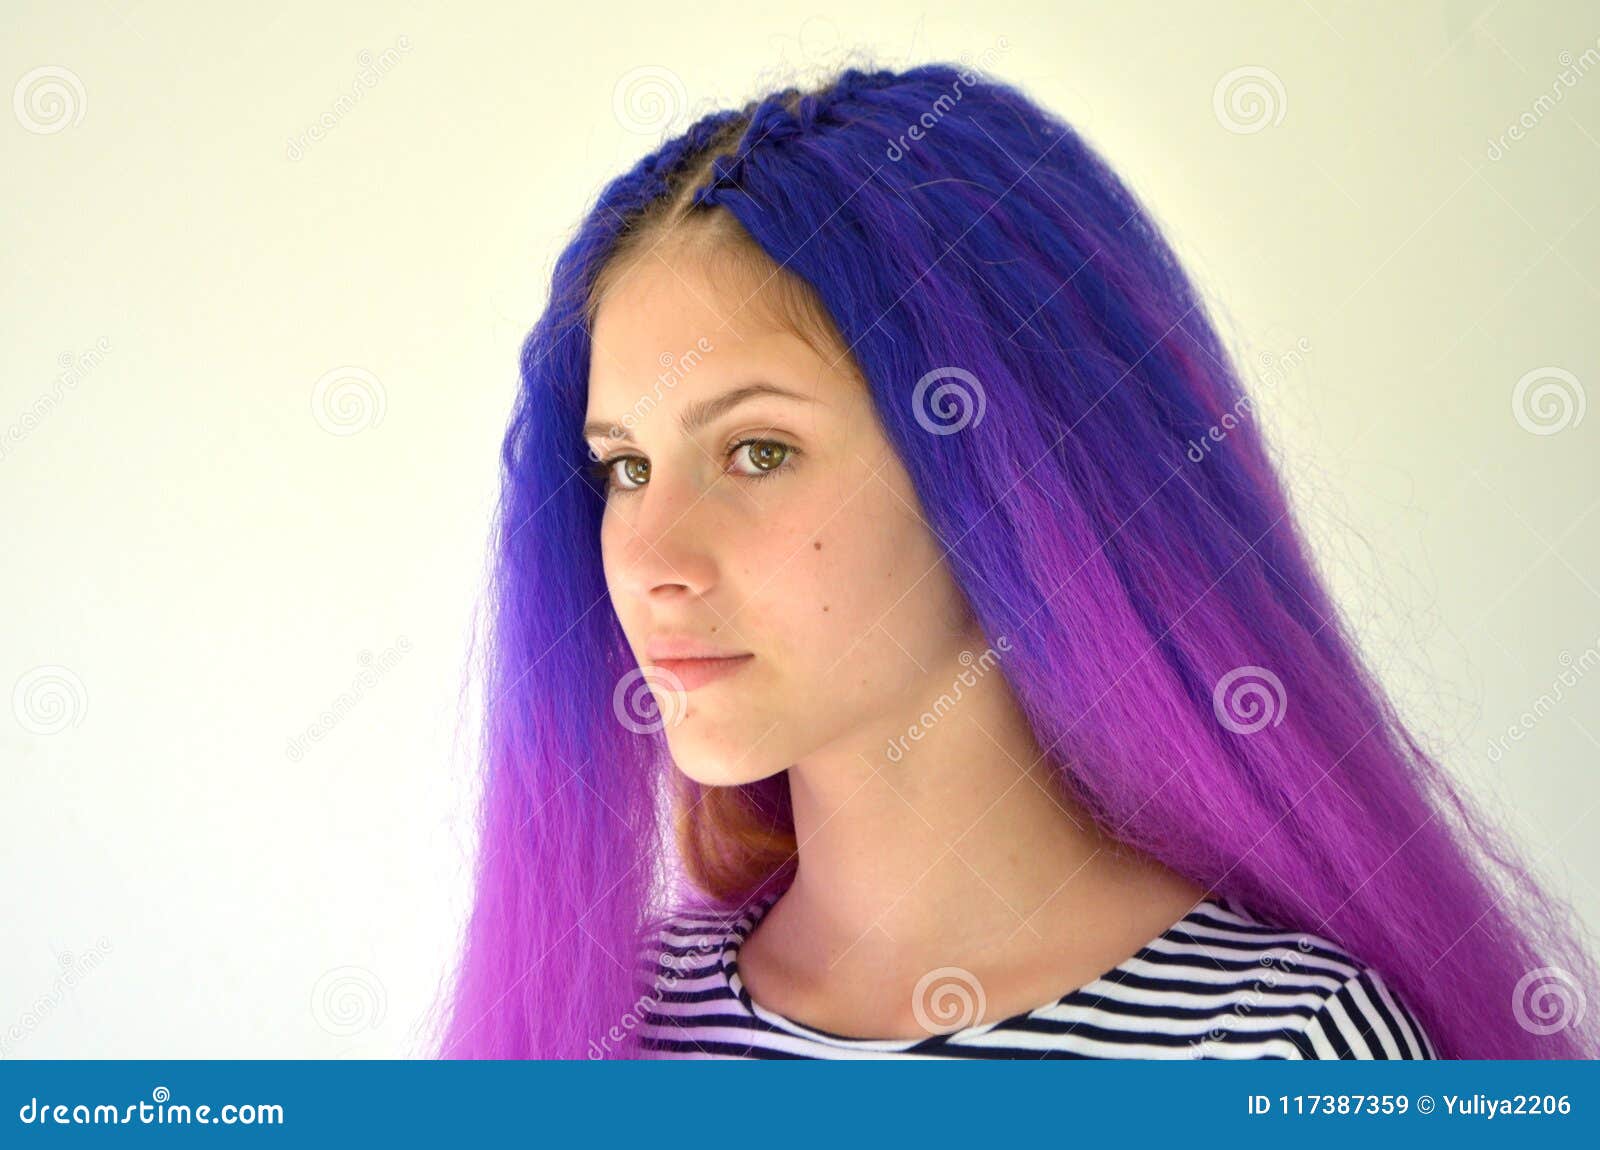 bright blue to purple hair